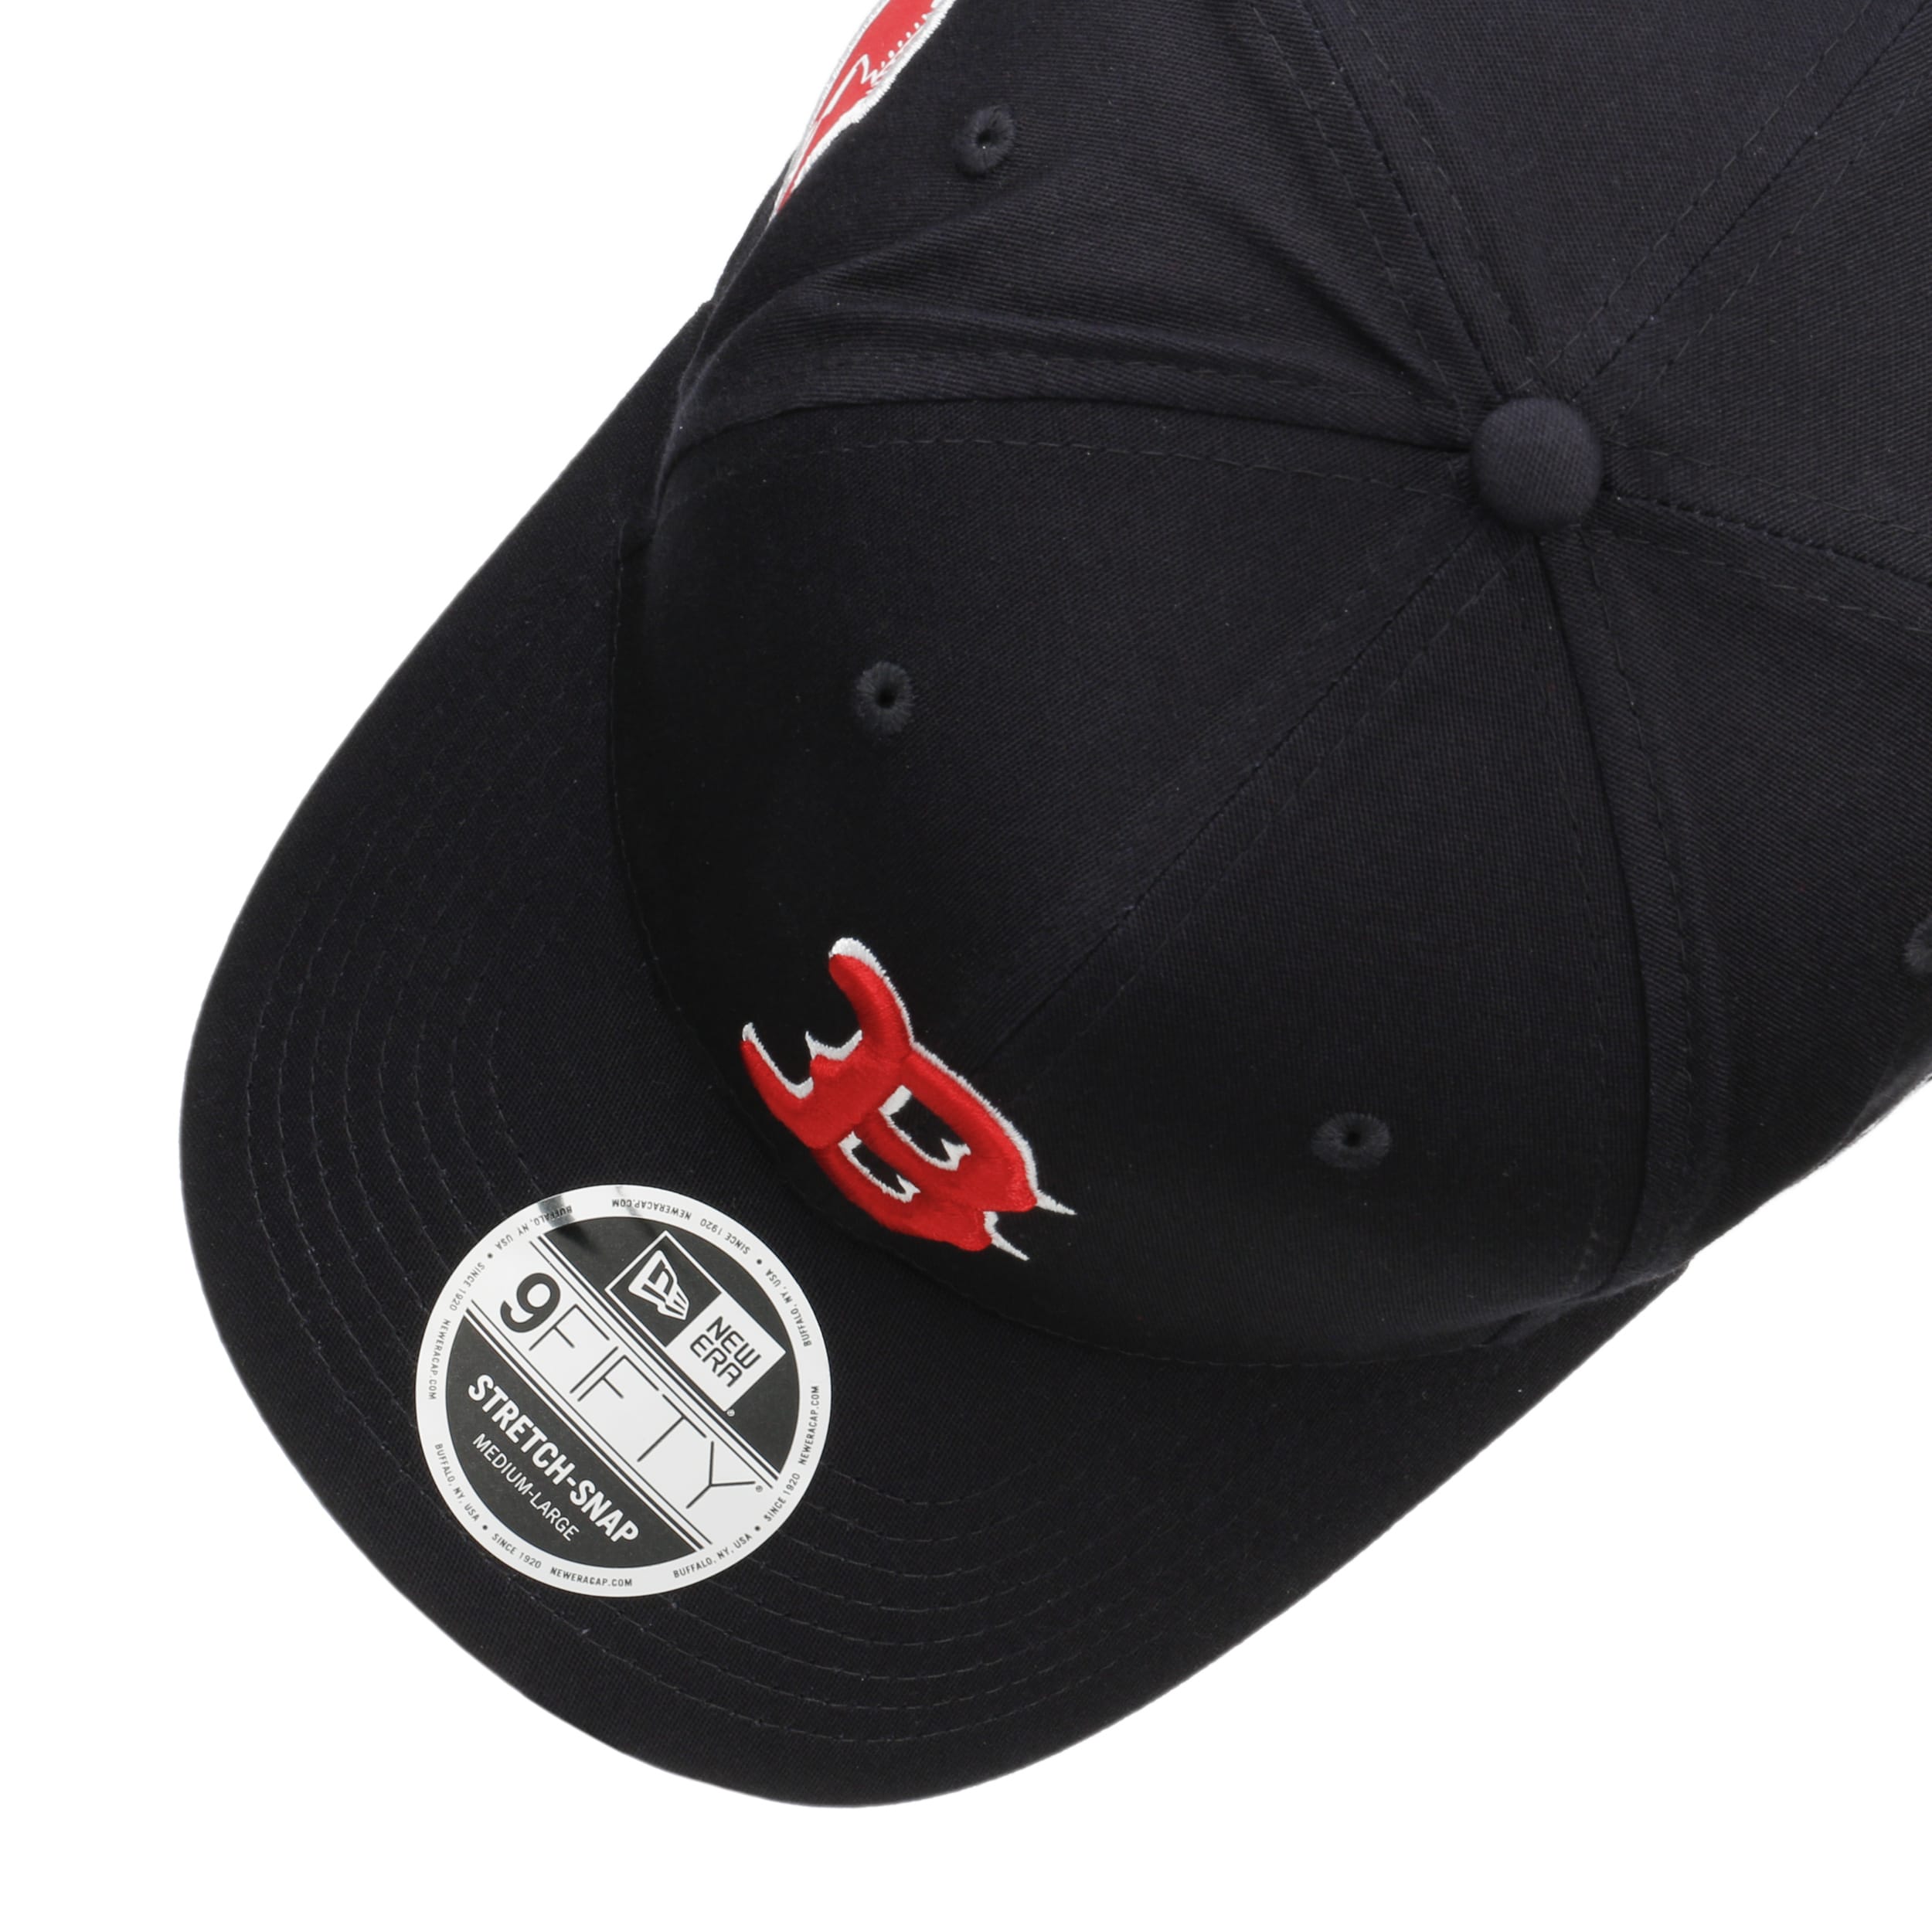 Boston Red Sox New Era 950 Black Stretch Snapback Cap